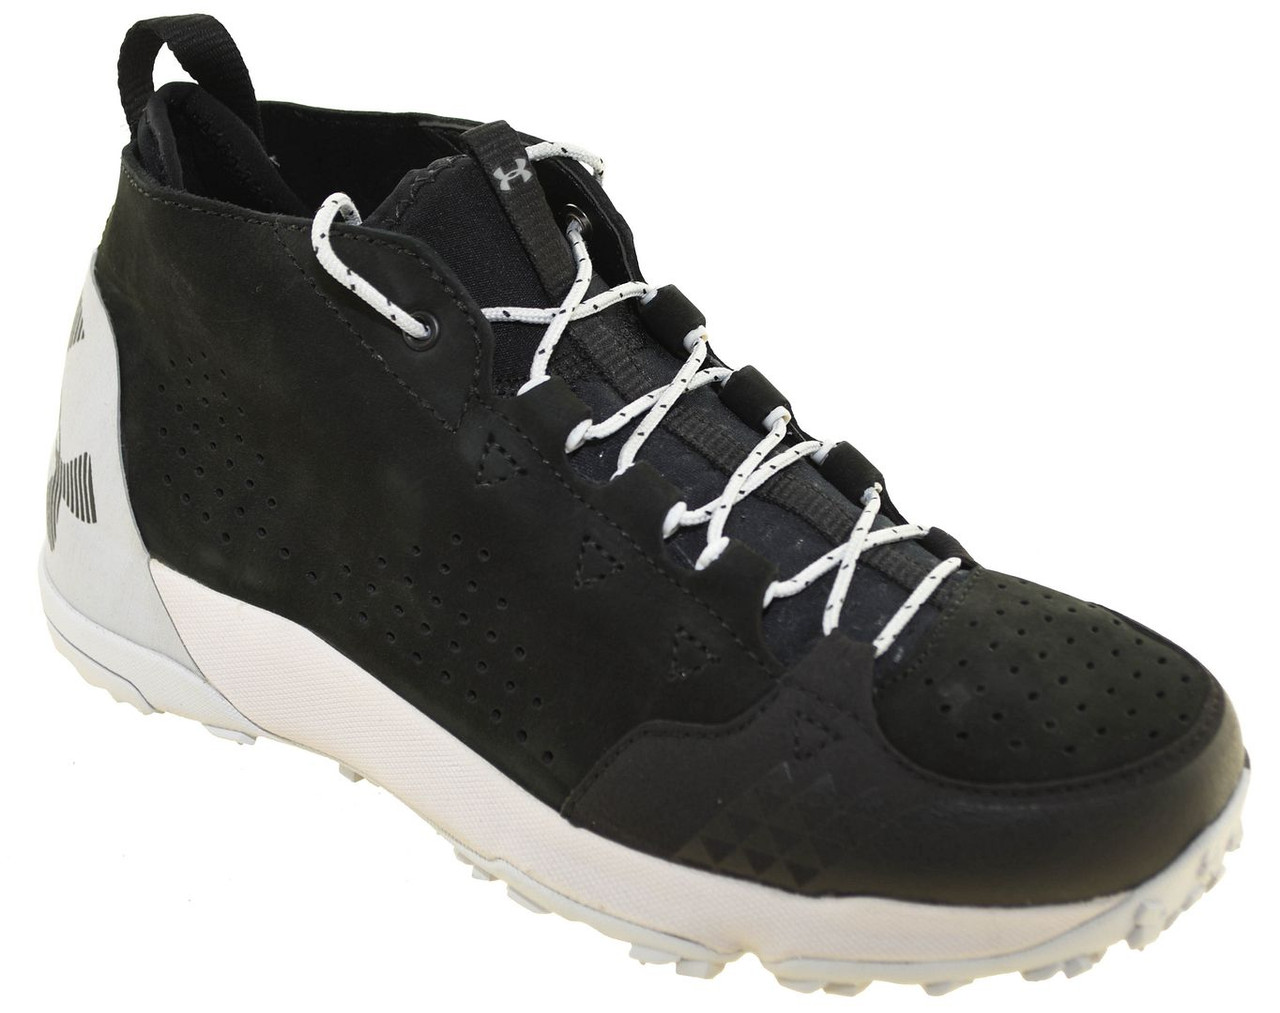 Vrijstelling Sloppenwijk parachute Under Armour Men's Burnt River Leather Hiking Shoes 1276370 001 - Right  Foot Shoes